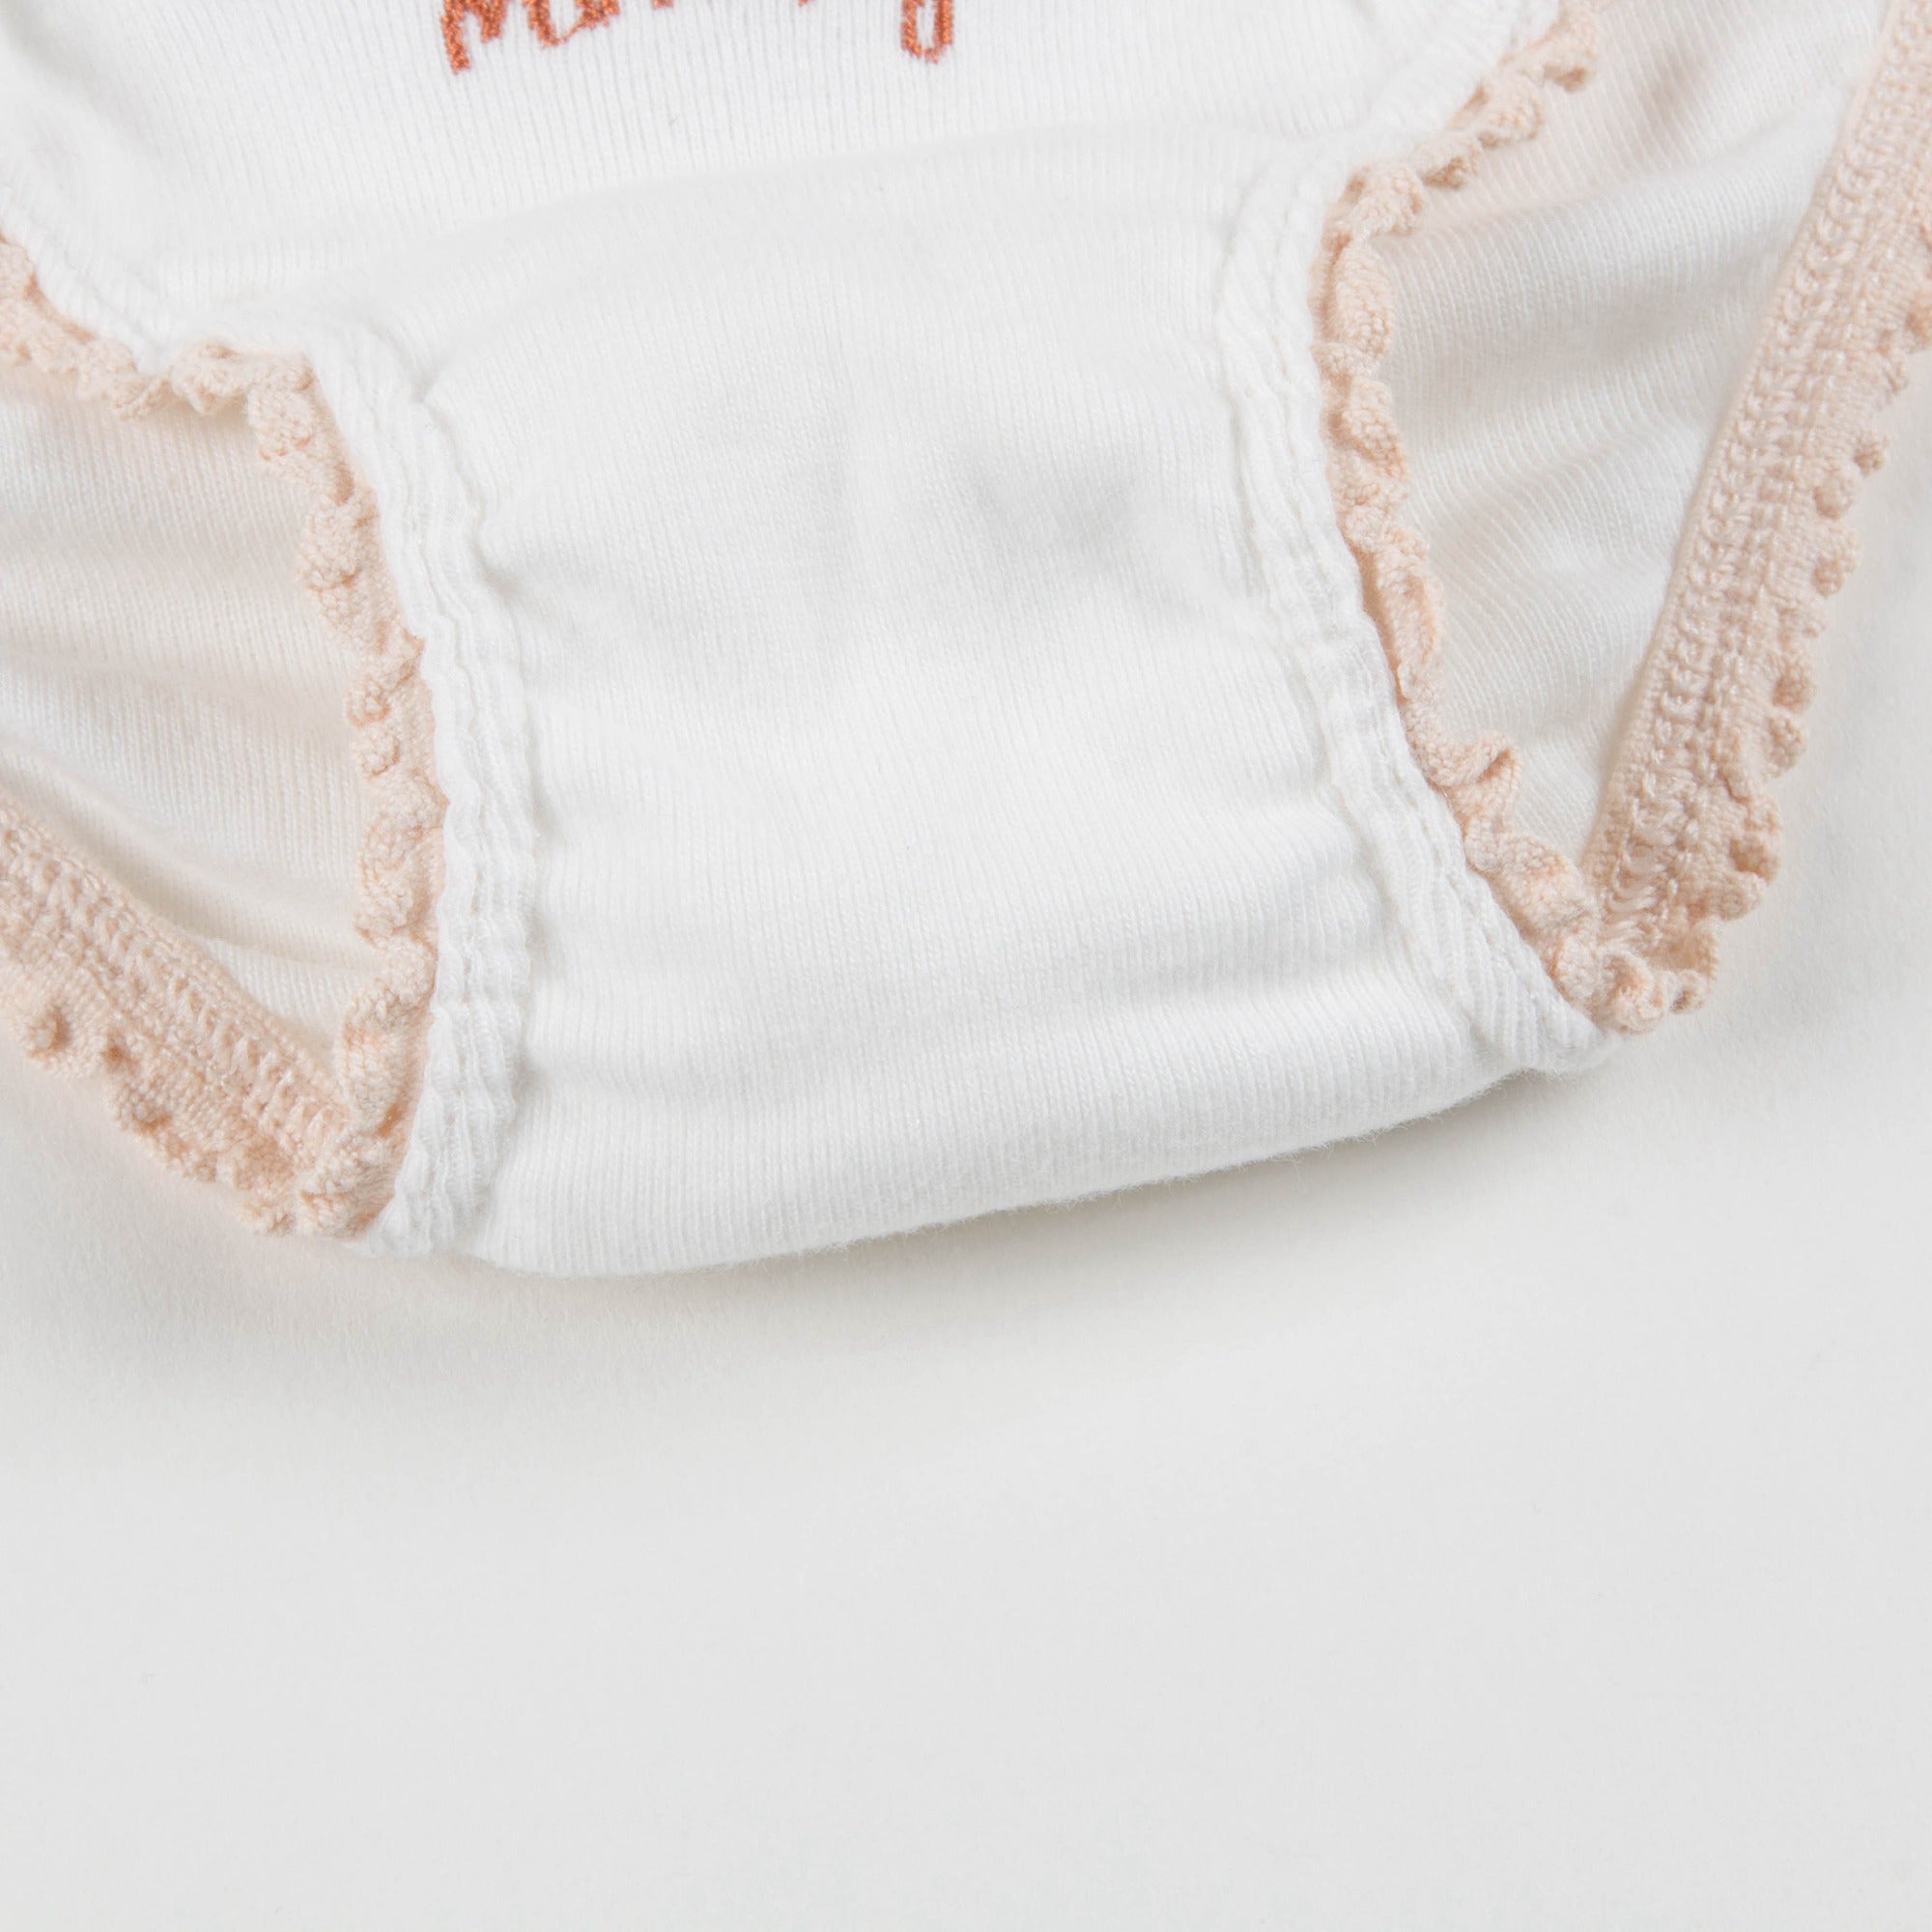 Girls White Anticipato Prim Underwear 7 Pack Gift Set